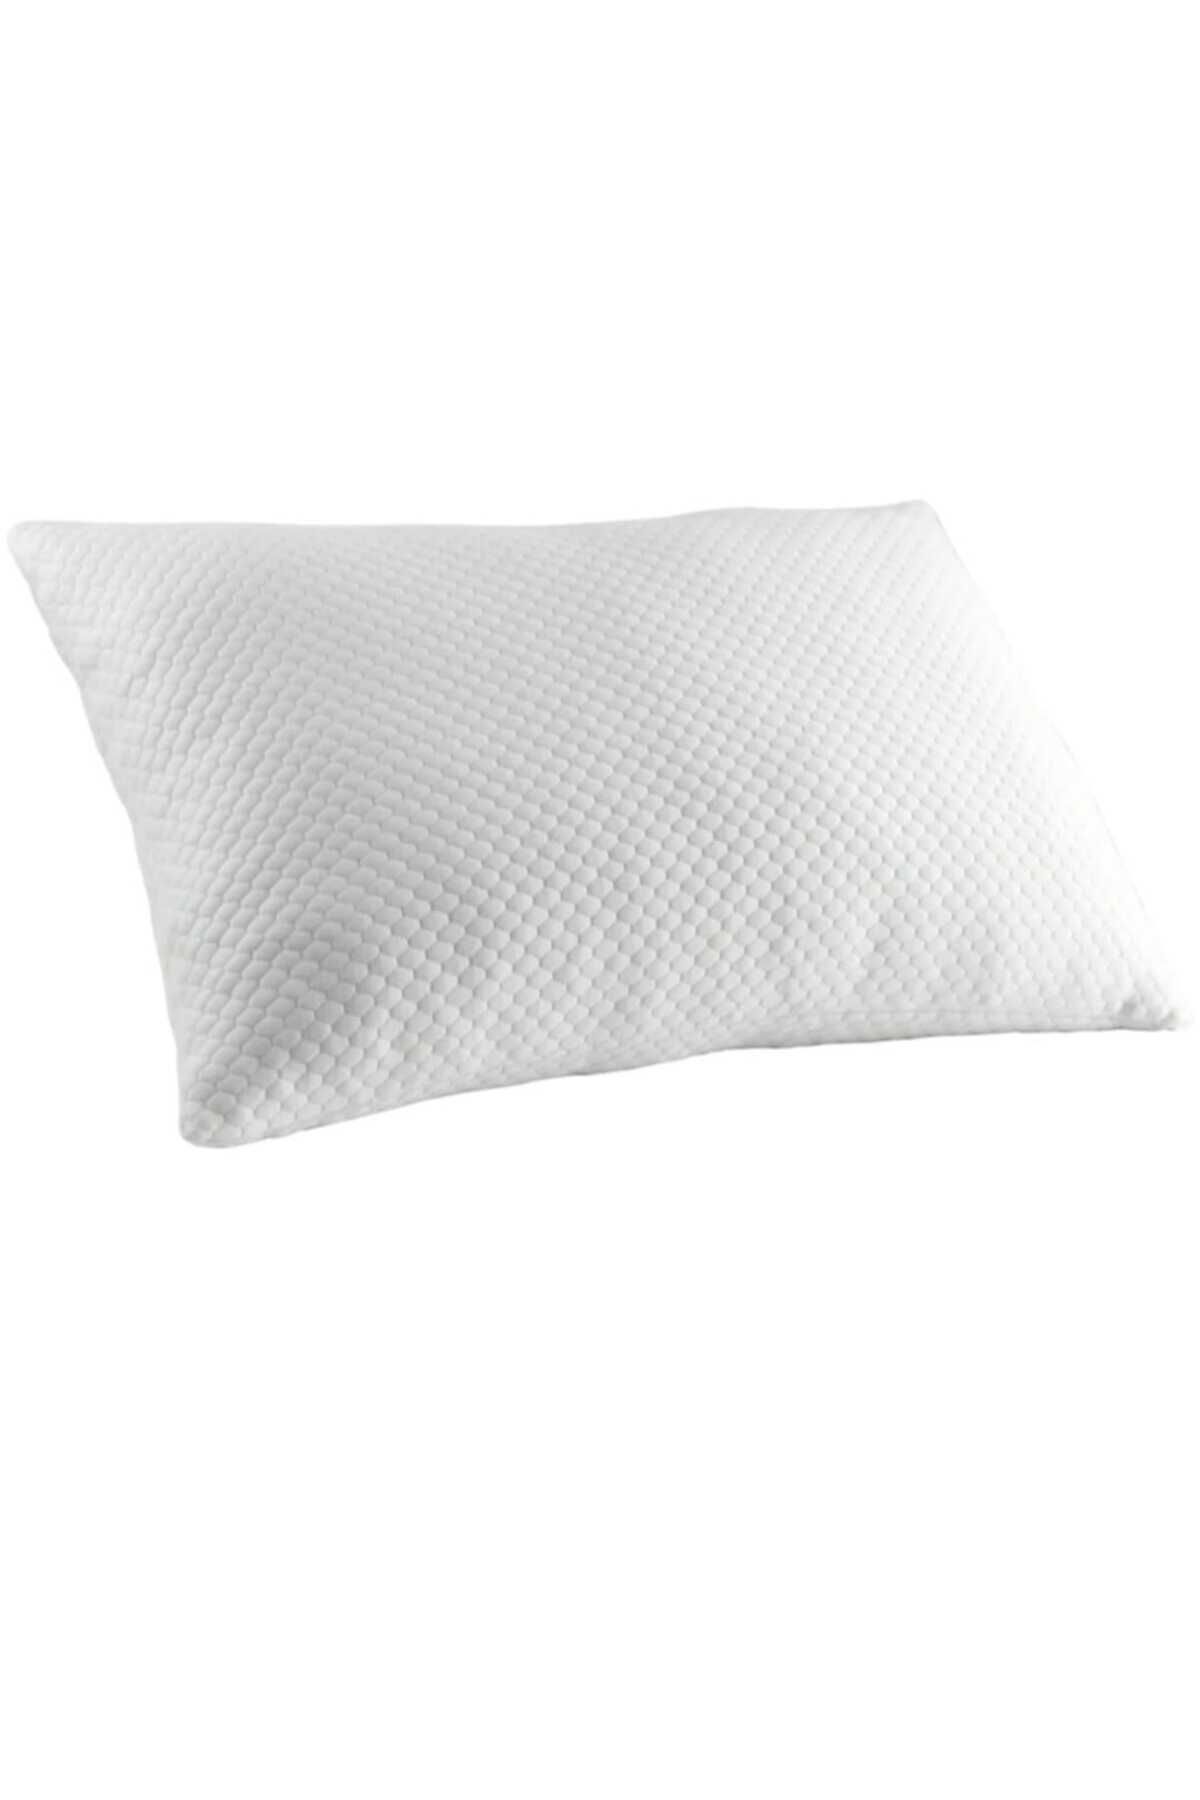 AYHOME Orthopedic Viskon Pillow Tıbbi Pillow Head Neck Yastığı Hard Hihg Pillow Climacomfort Yastık